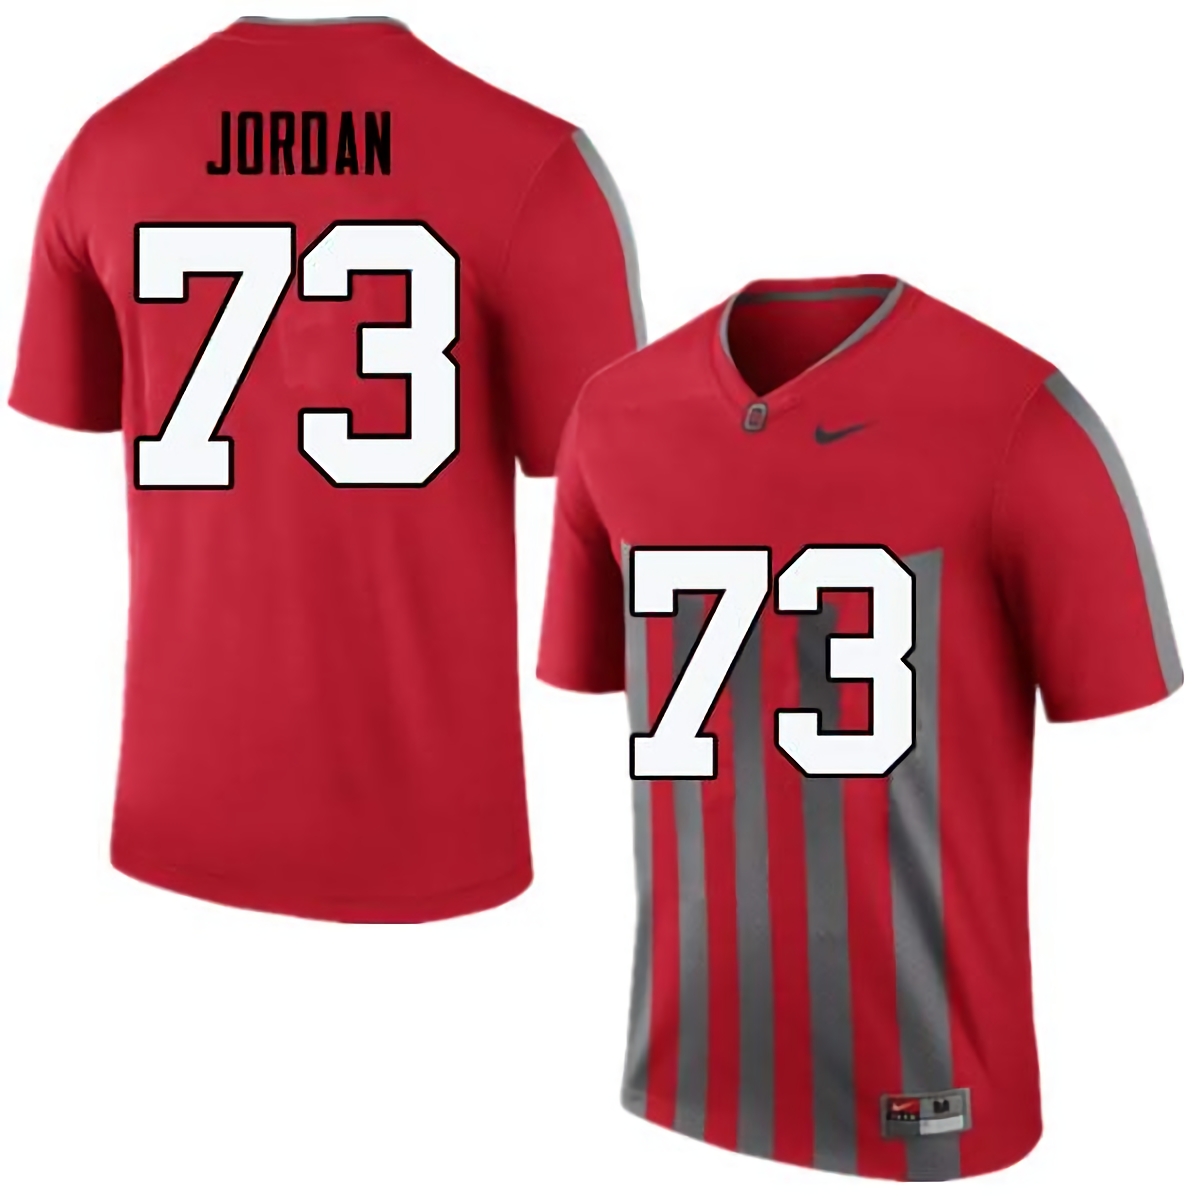 Michael Jordan Ohio State Buckeyes Men's NCAA #73 Nike Throwback Red College Stitched Football Jersey NUS6656GE